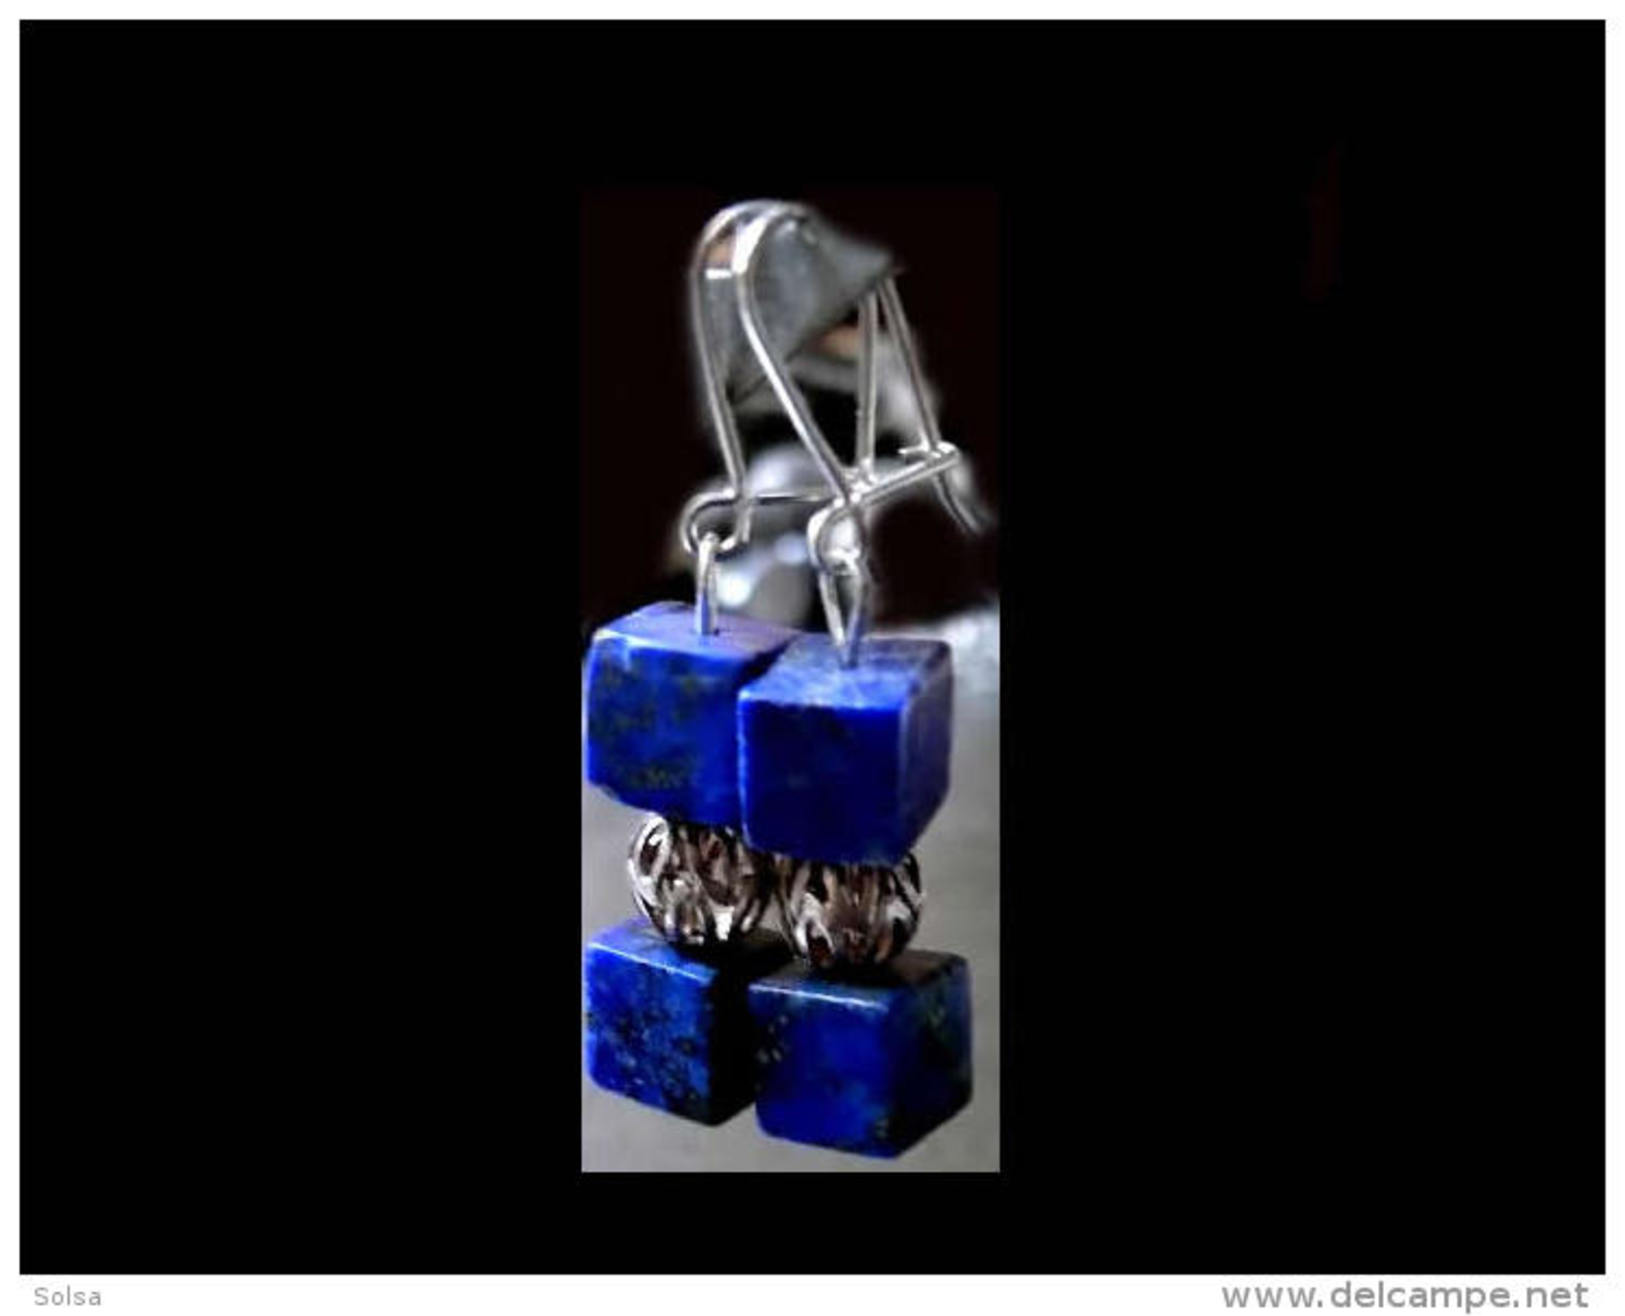 Superbes Boucles D'oreille Géométriqueqlapis Afghan / Afghani Lapis Lazuli And Iranian Gold Platted Silver Bead Earrings - Earrings